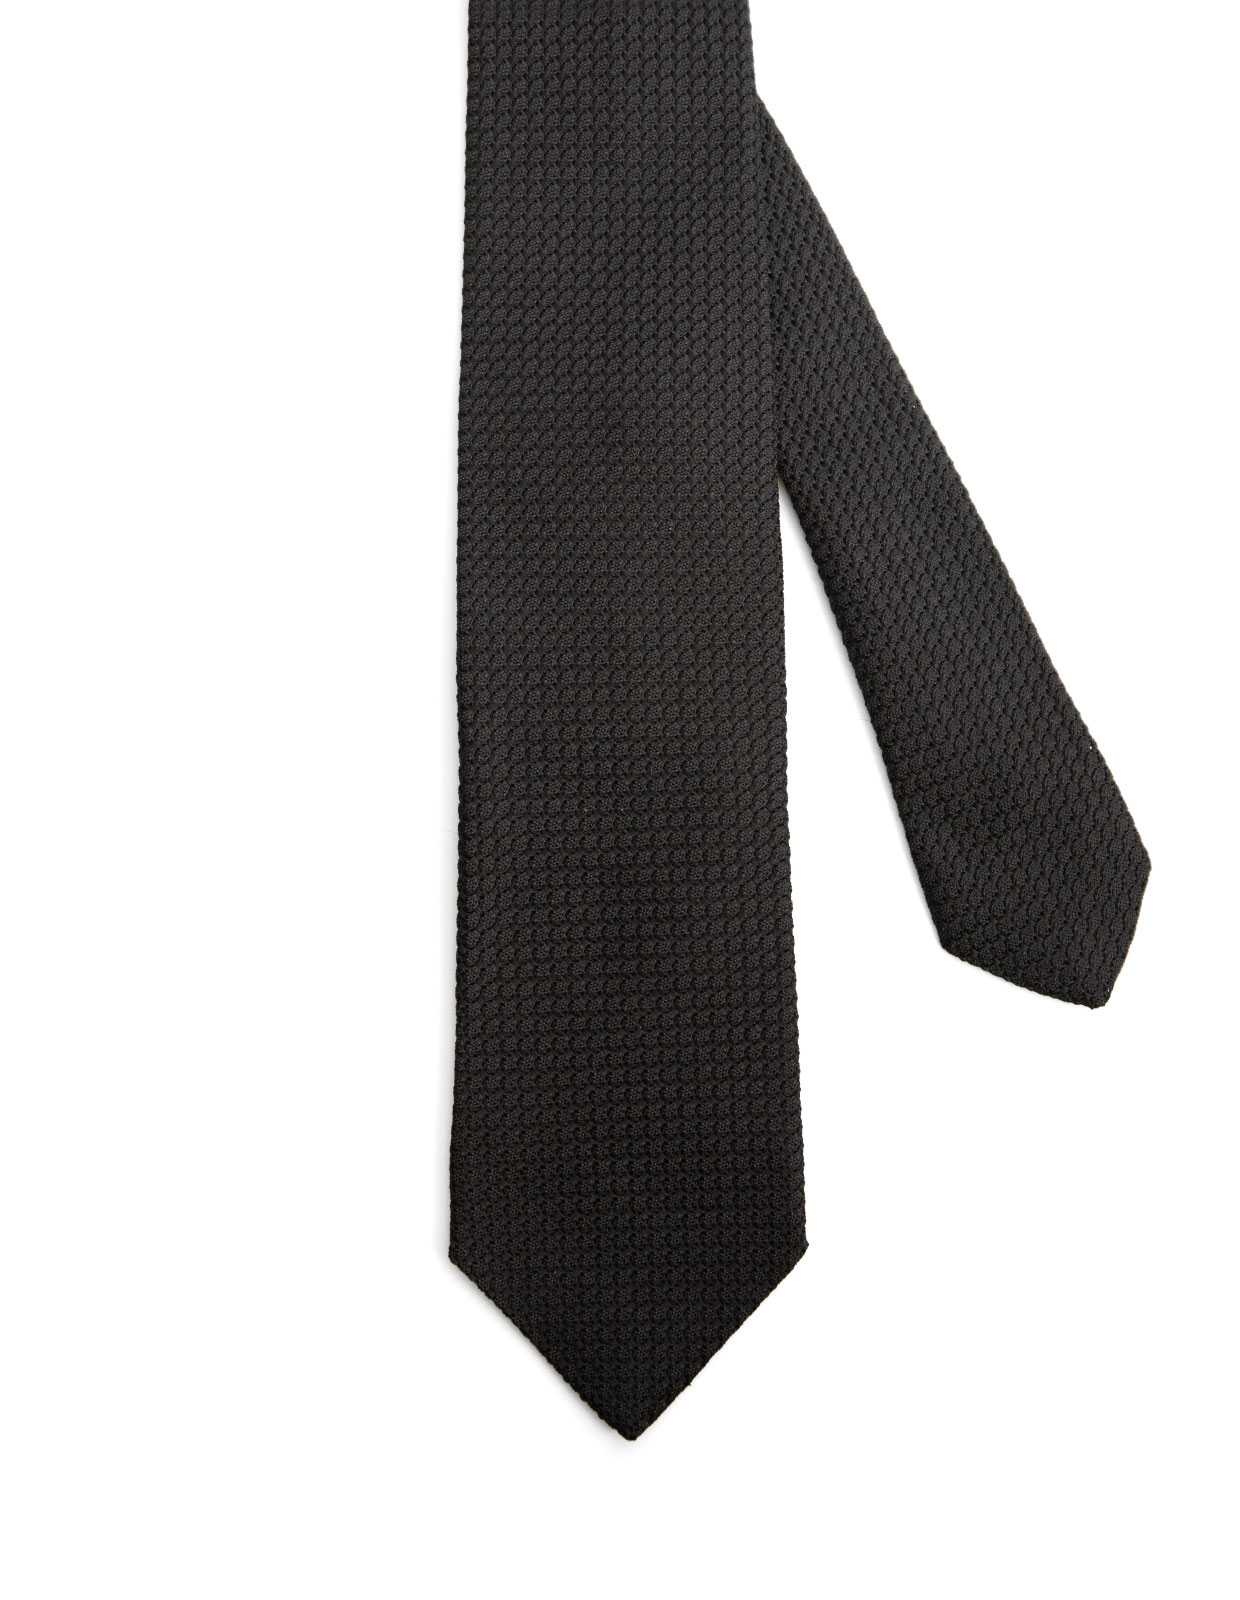 Grenadine Tie Lined Large Knot Black